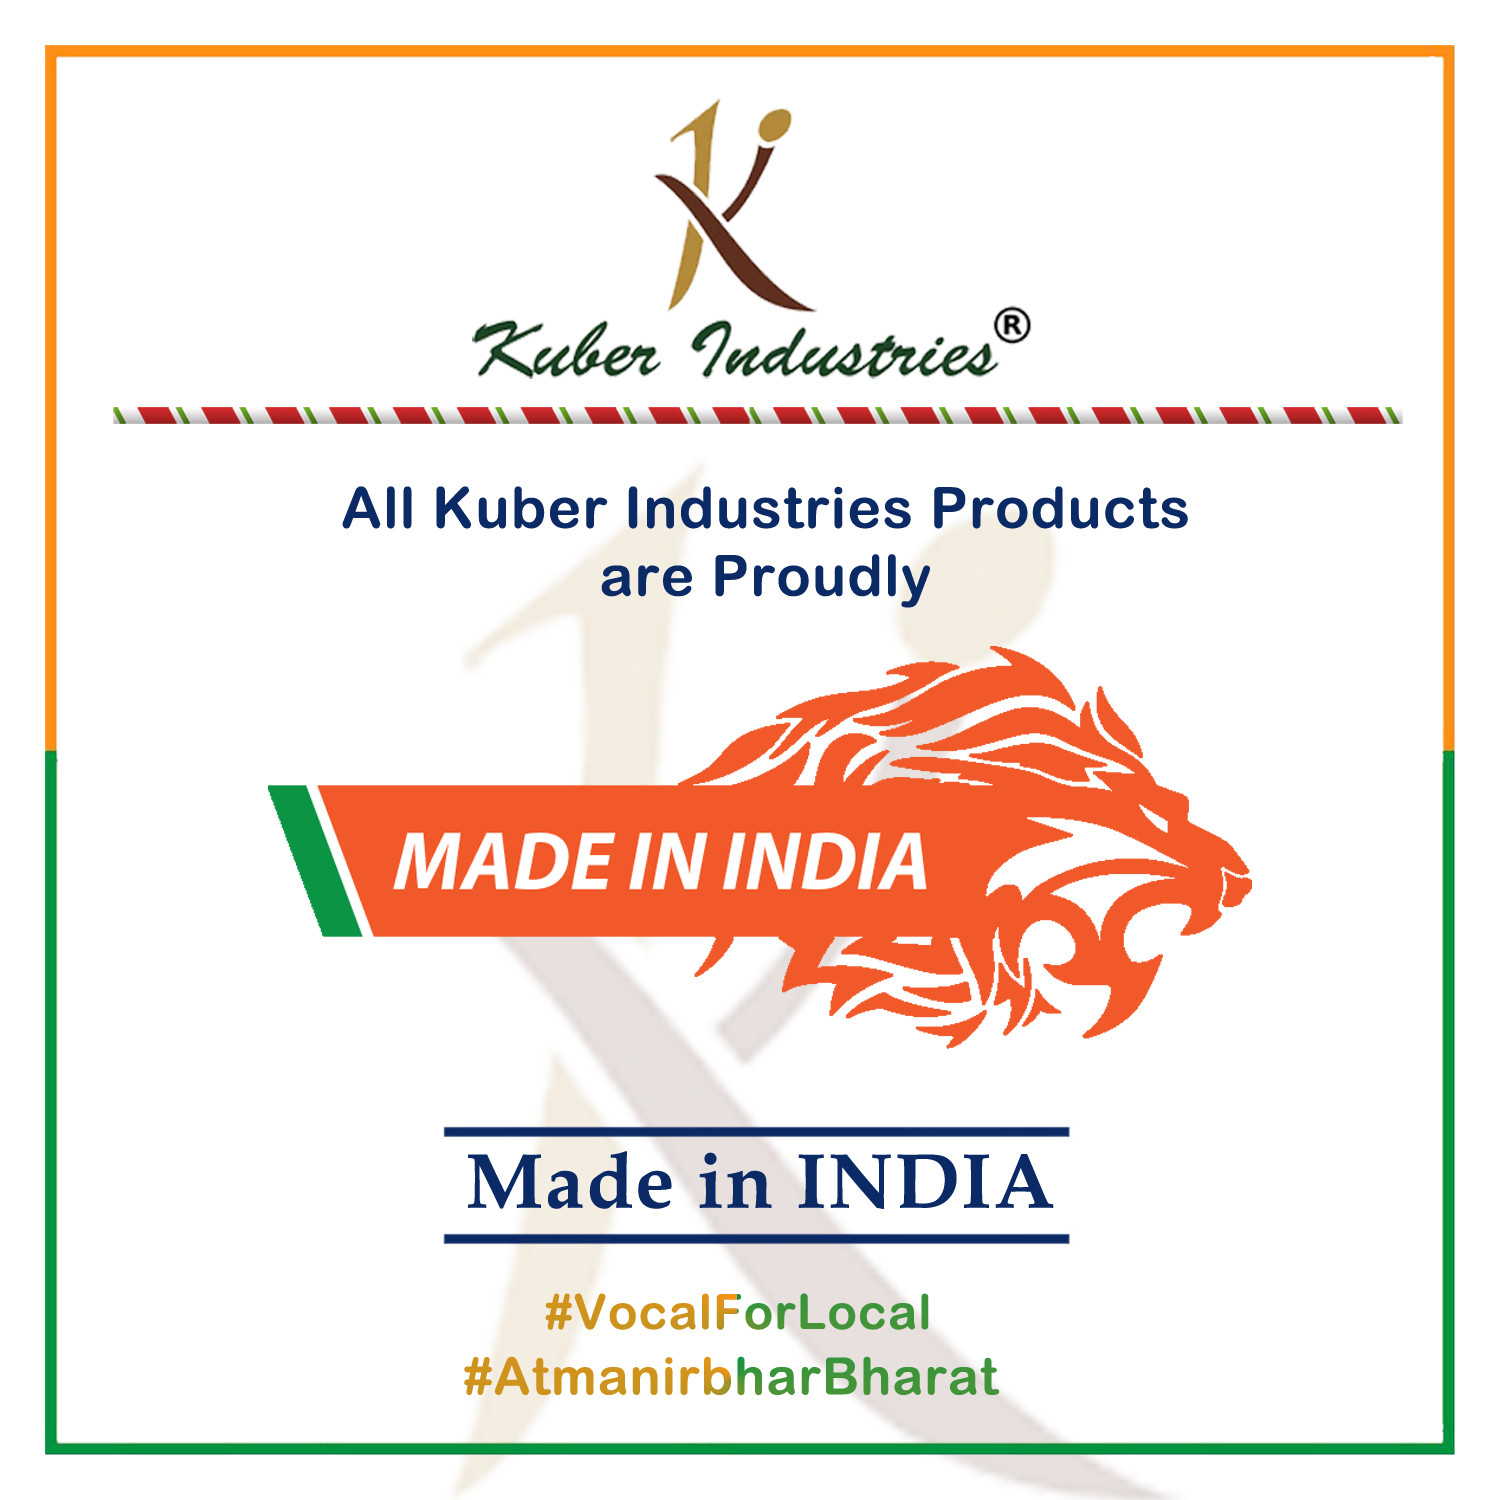 Kuber Industries Popular 3-Layer Stainless Steel Multipurpose Storage Rack/Shelf, Kitchen Rack With Wheels (Silver)